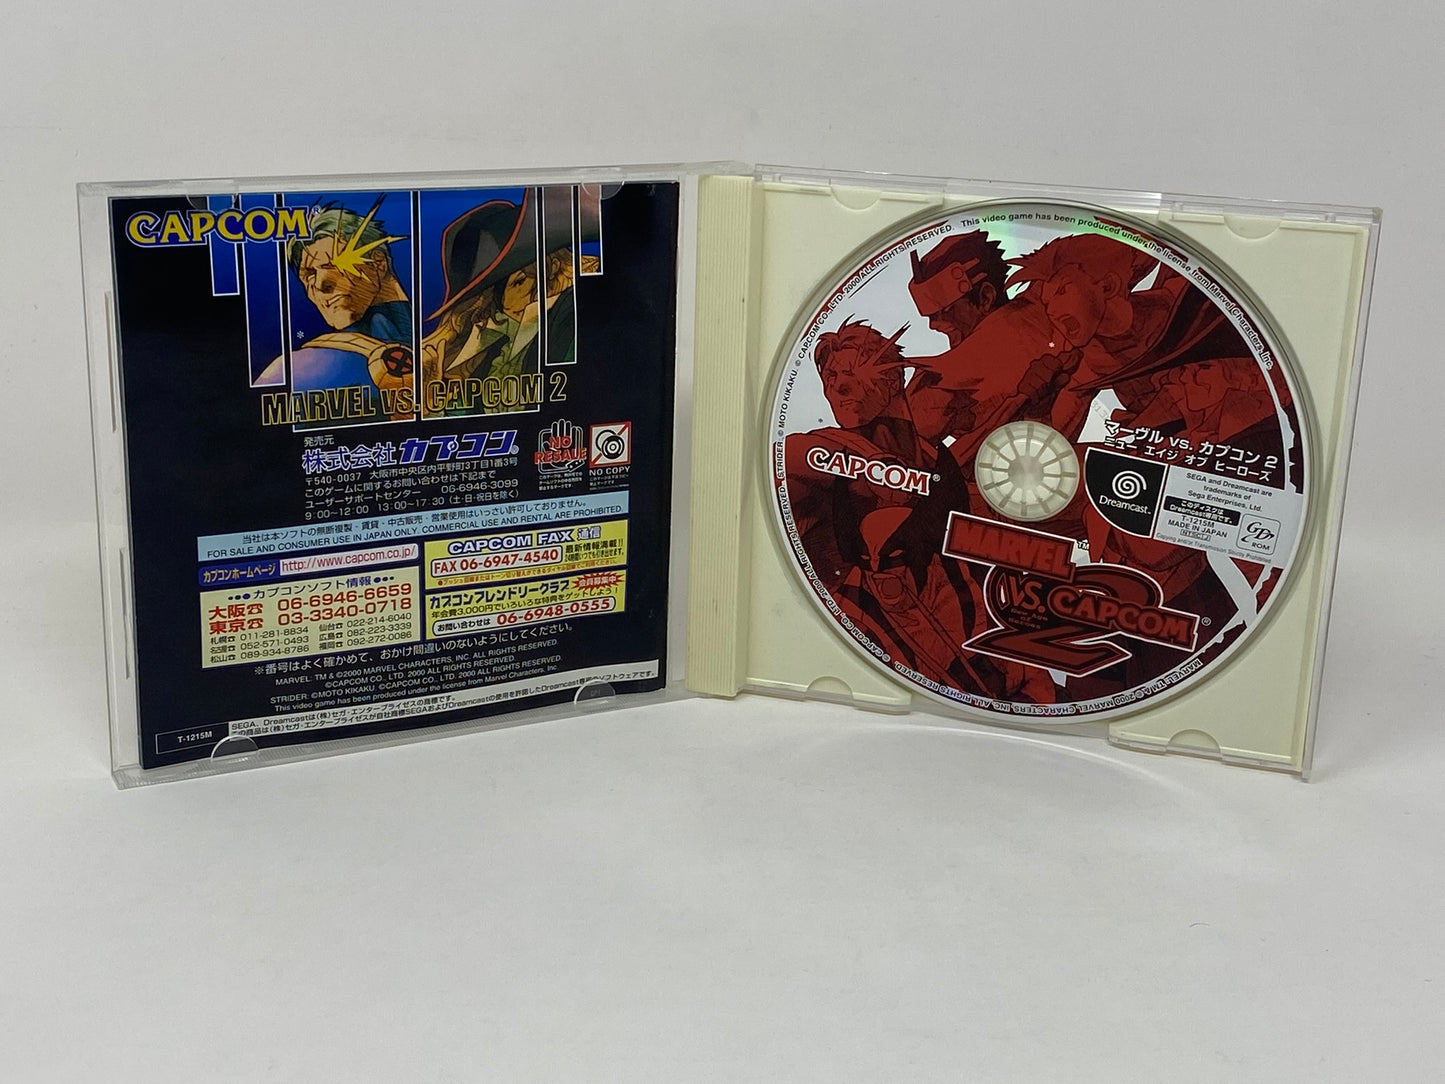 Sega Dreamcast - Marvel vs Capcom 2 Age of Heroes - Japan Import